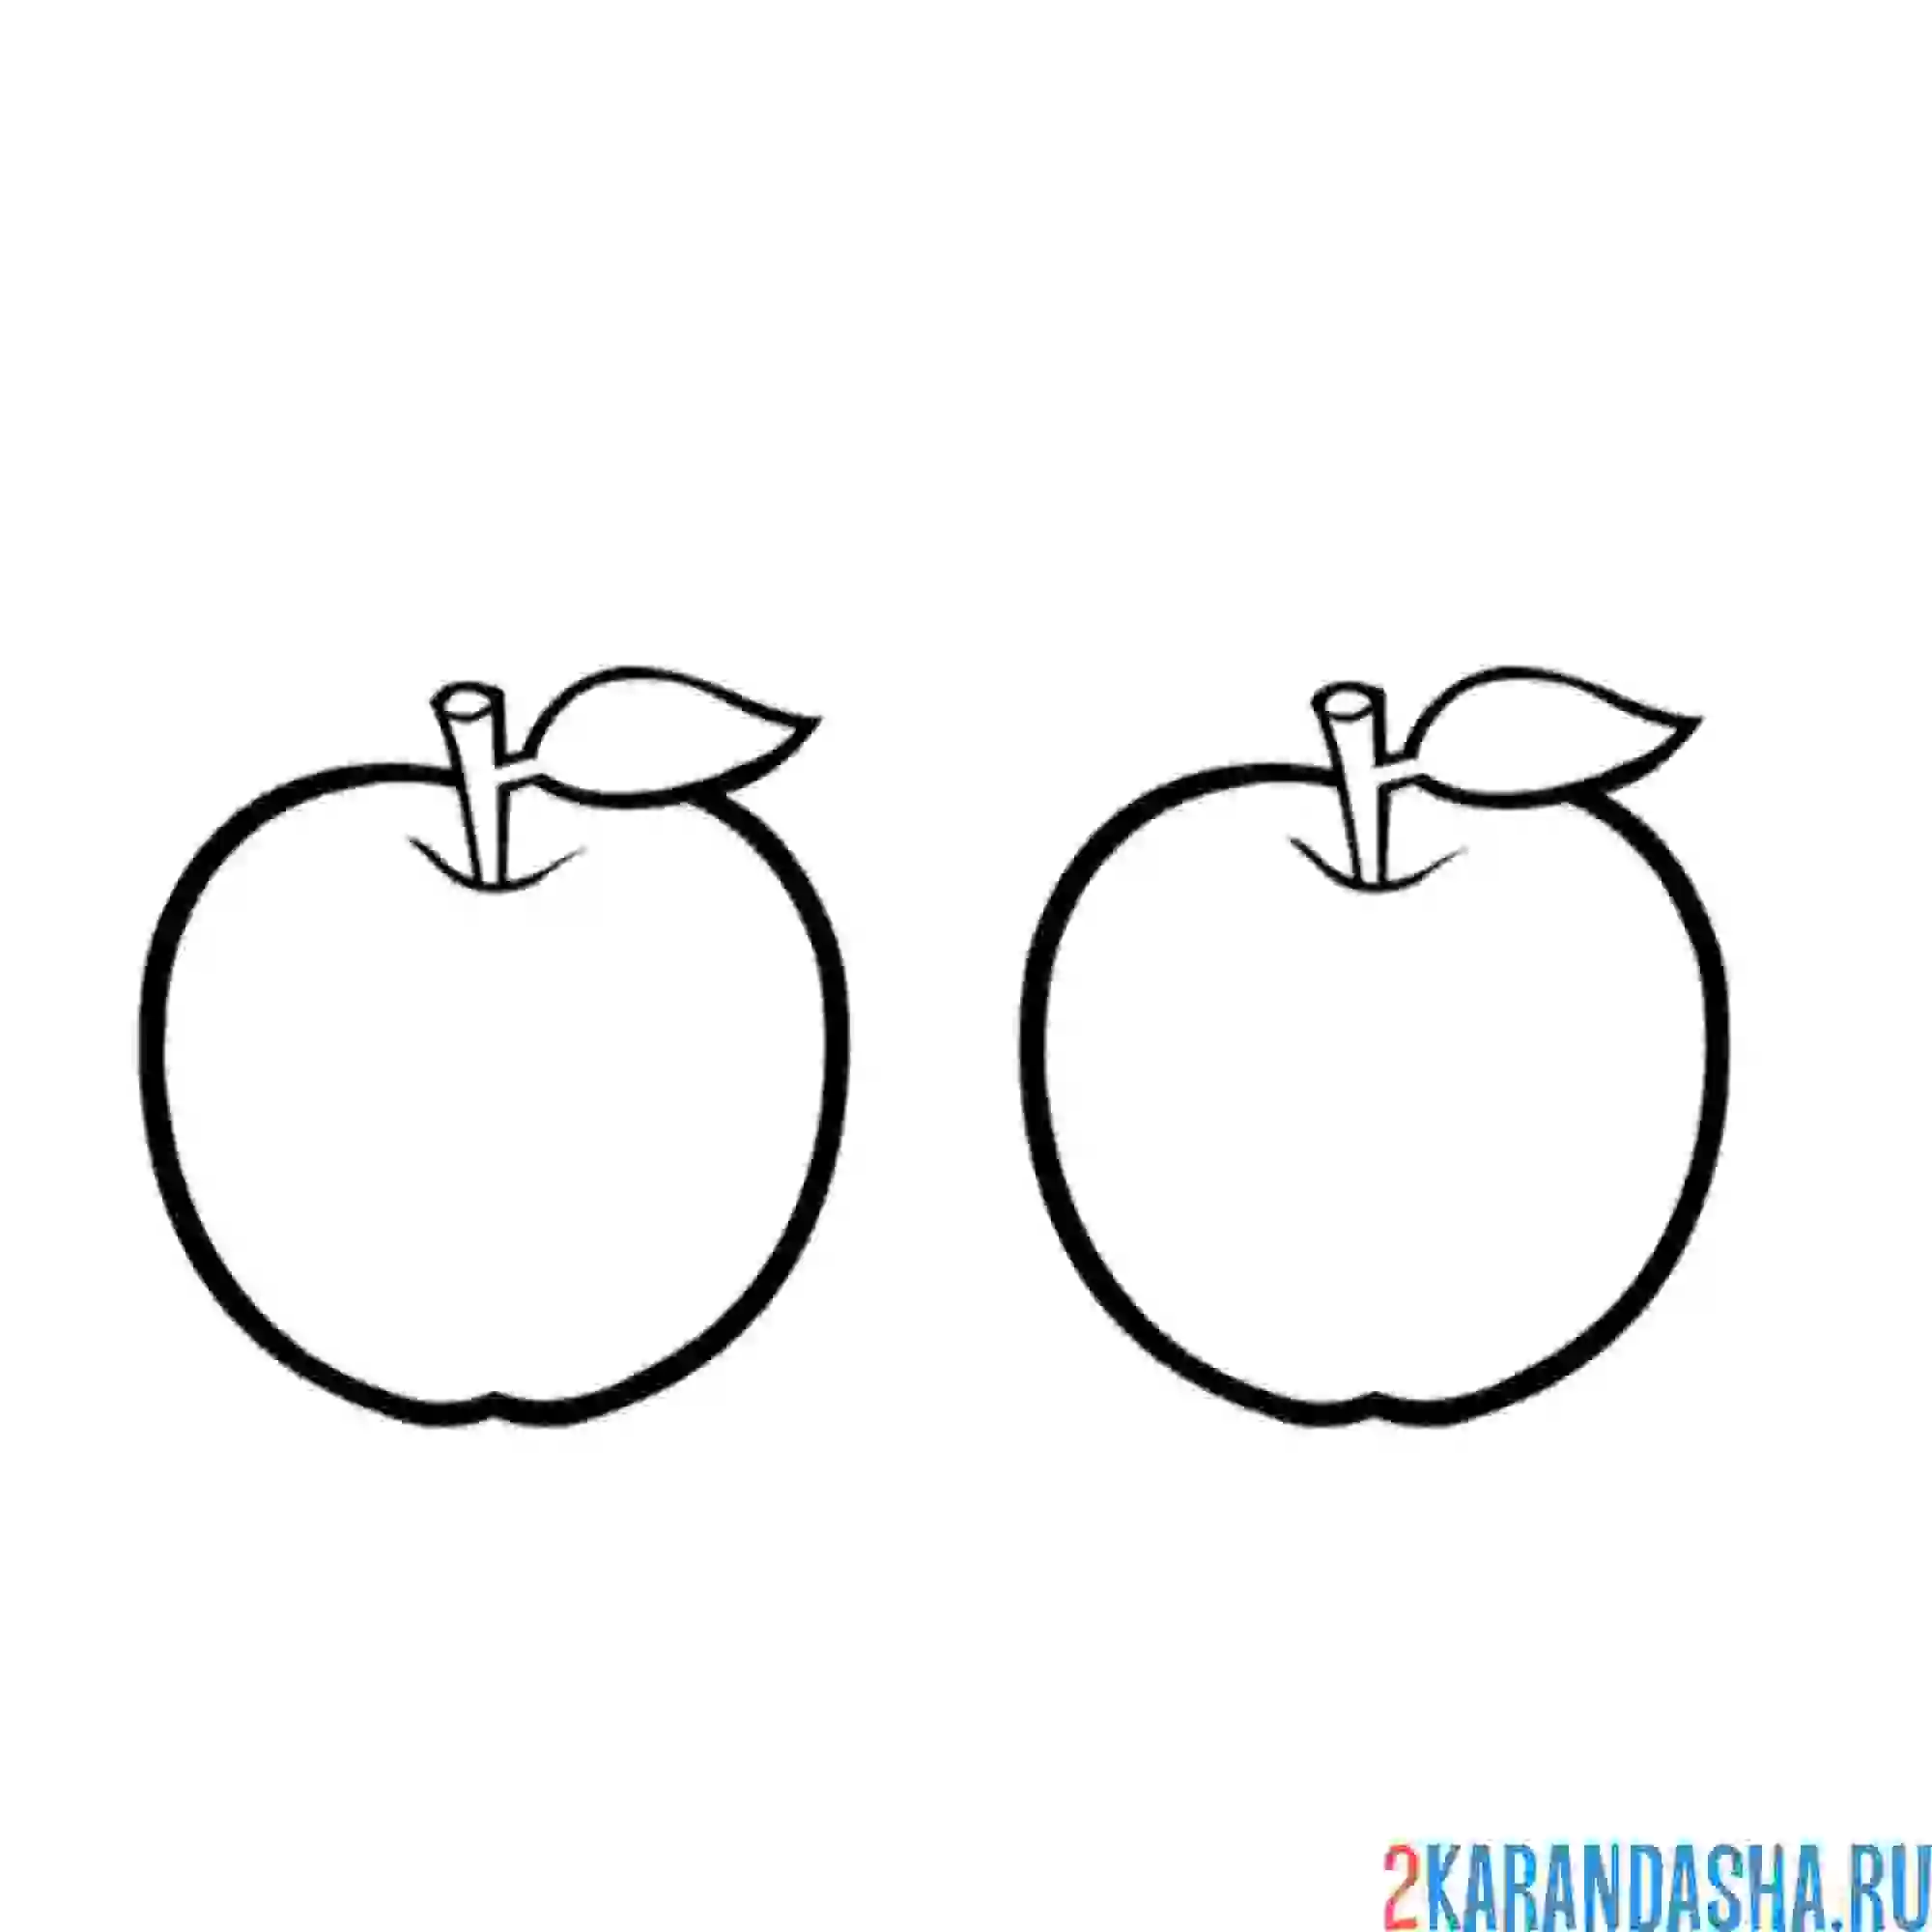 Раскраска два яблока